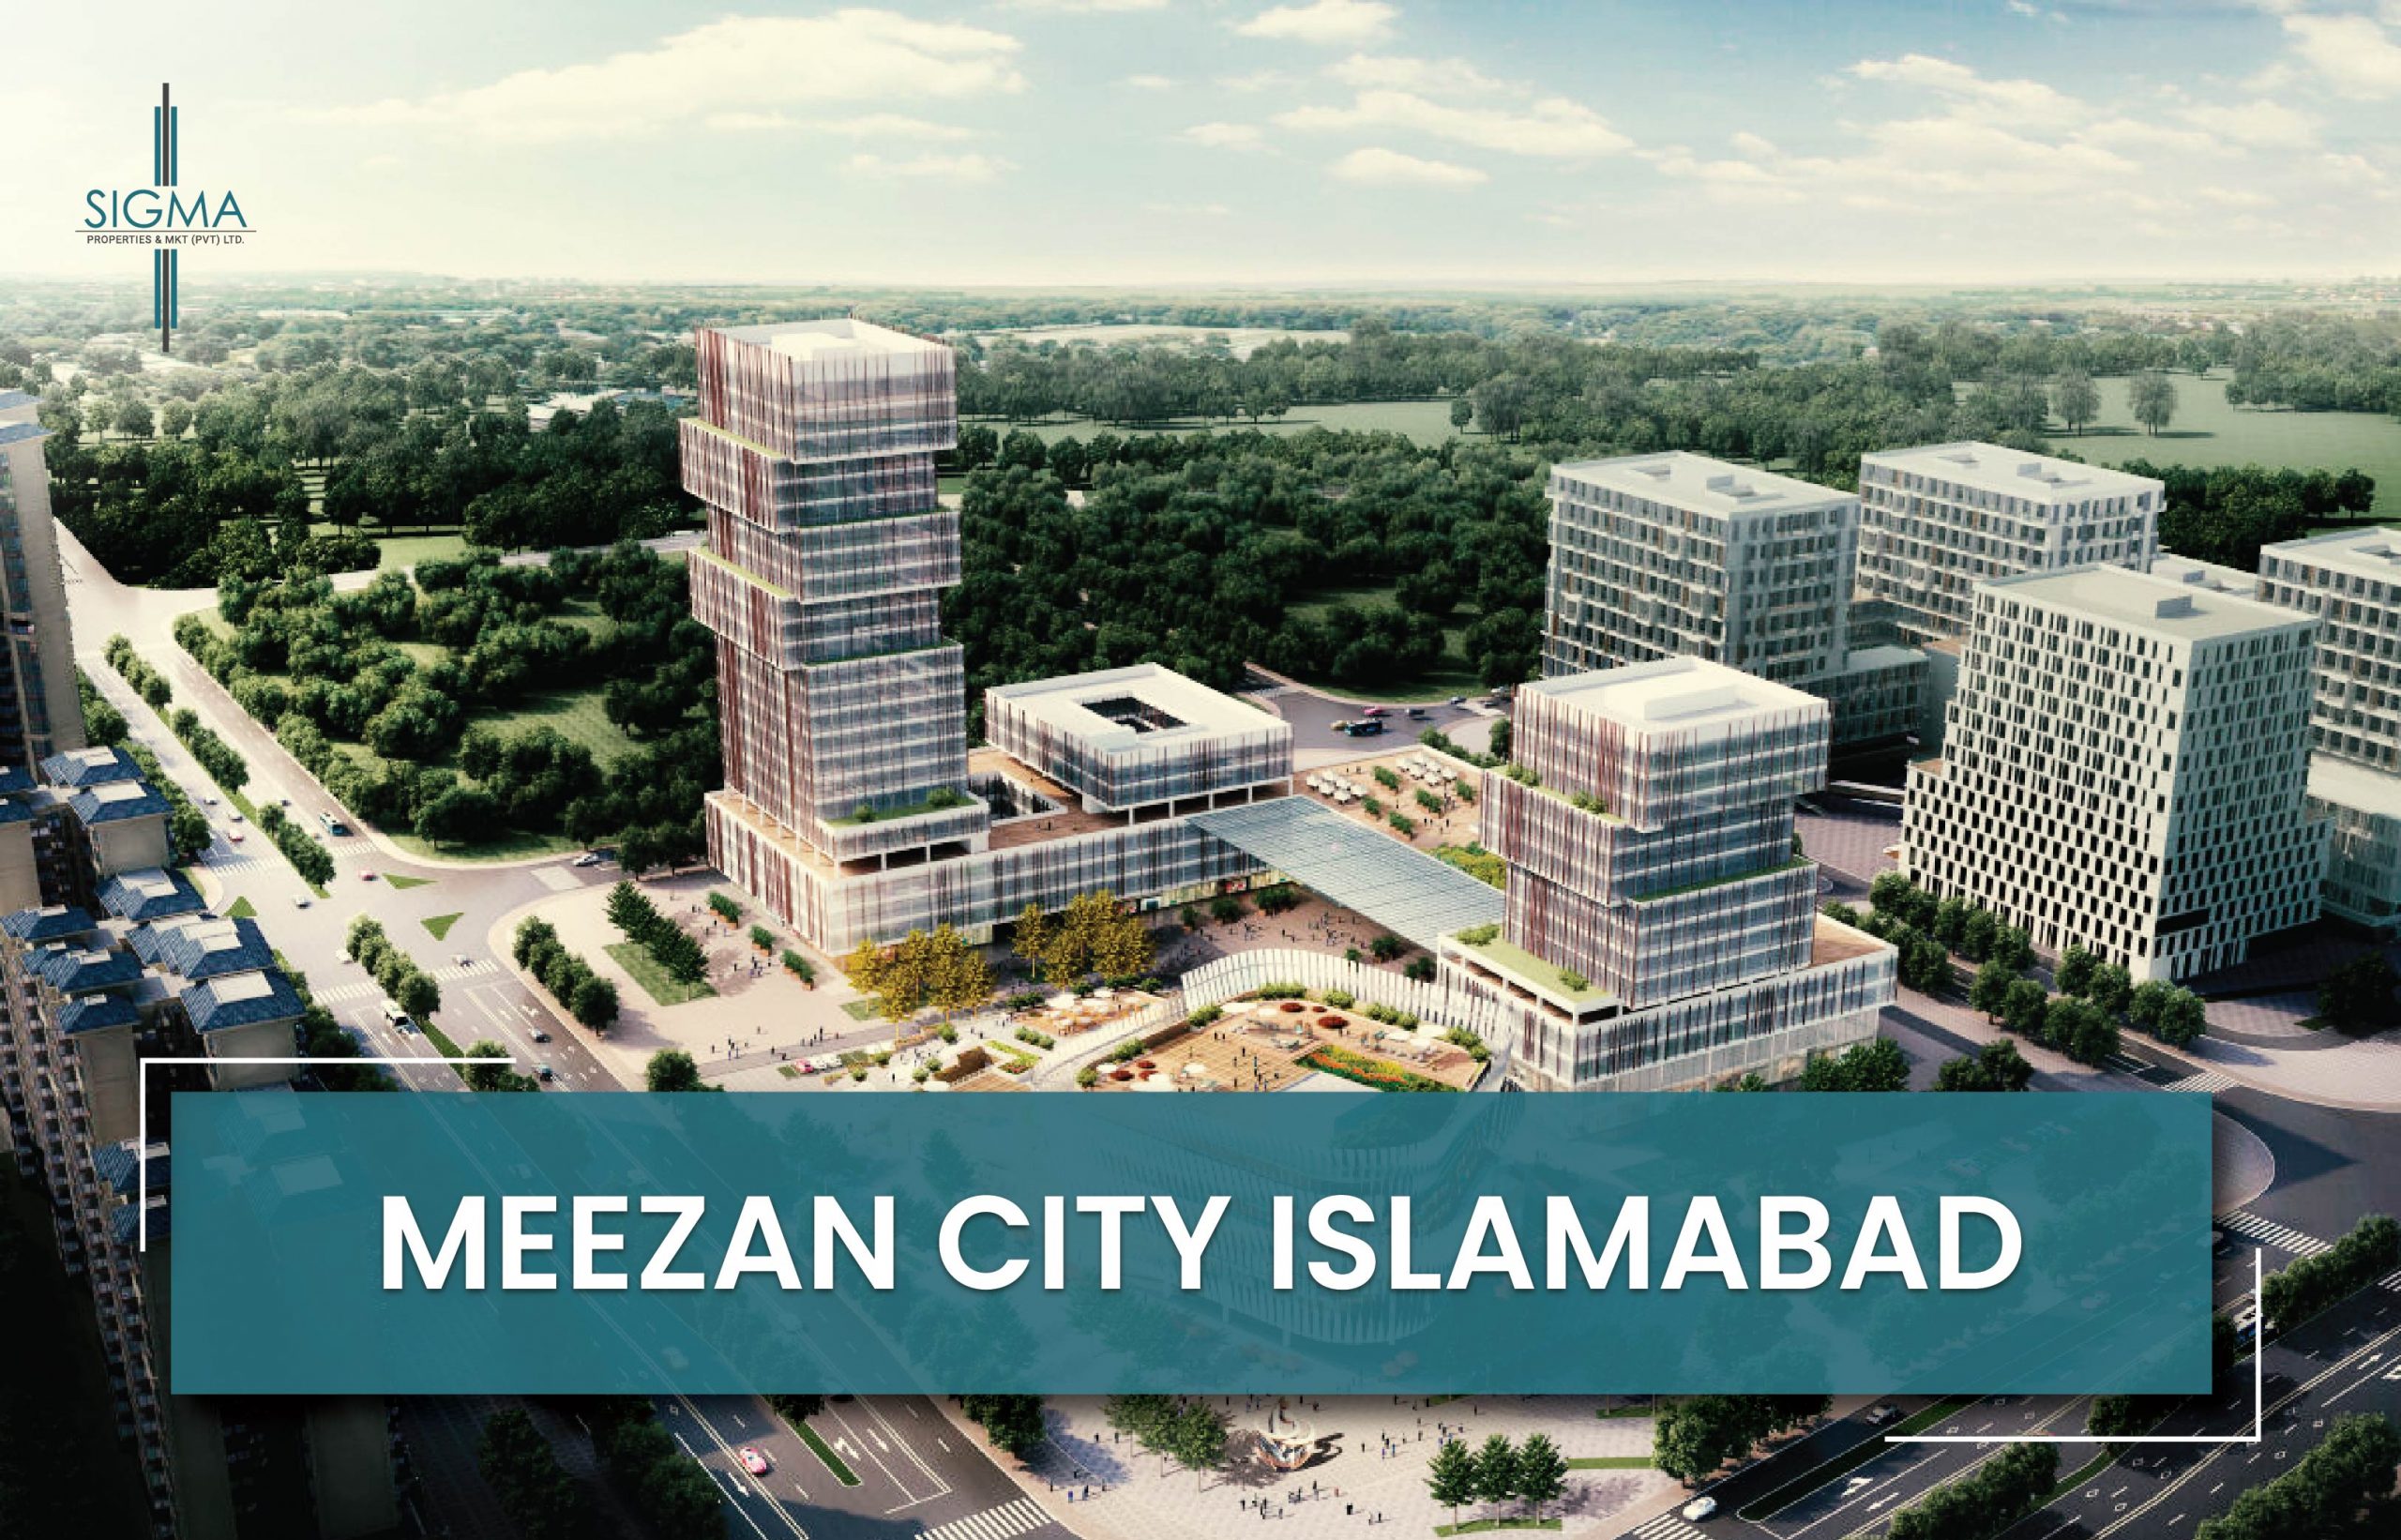 Meezan City Islamabad